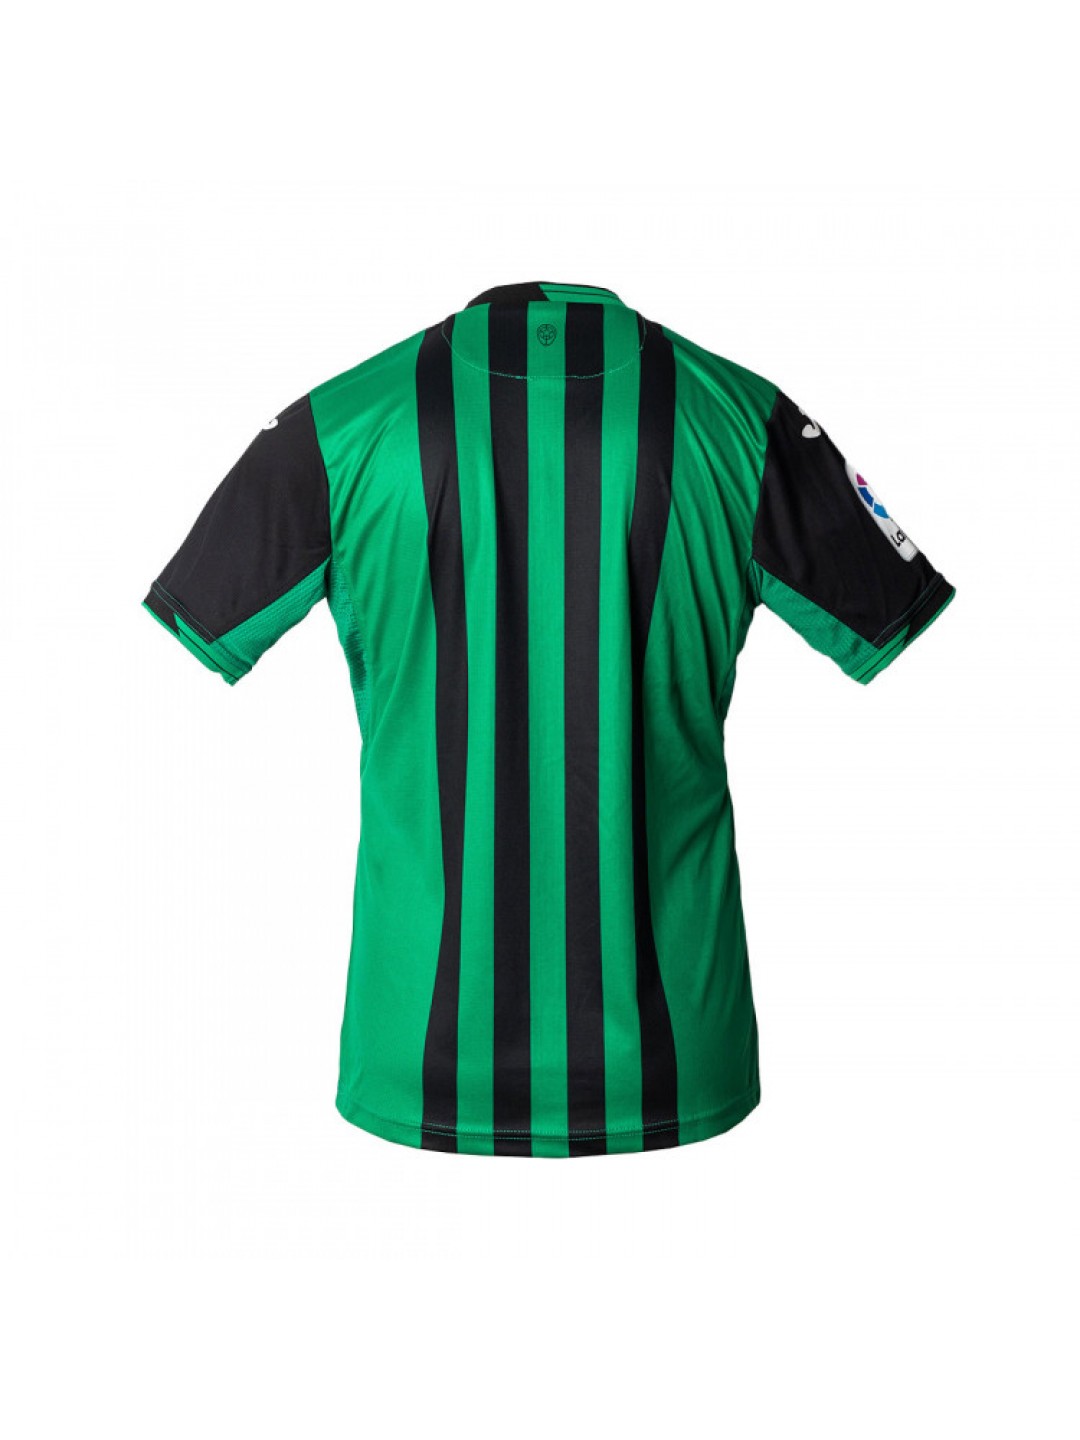 Eibar SD Spain 2021 - 2022 home football shirt jersey camiseta